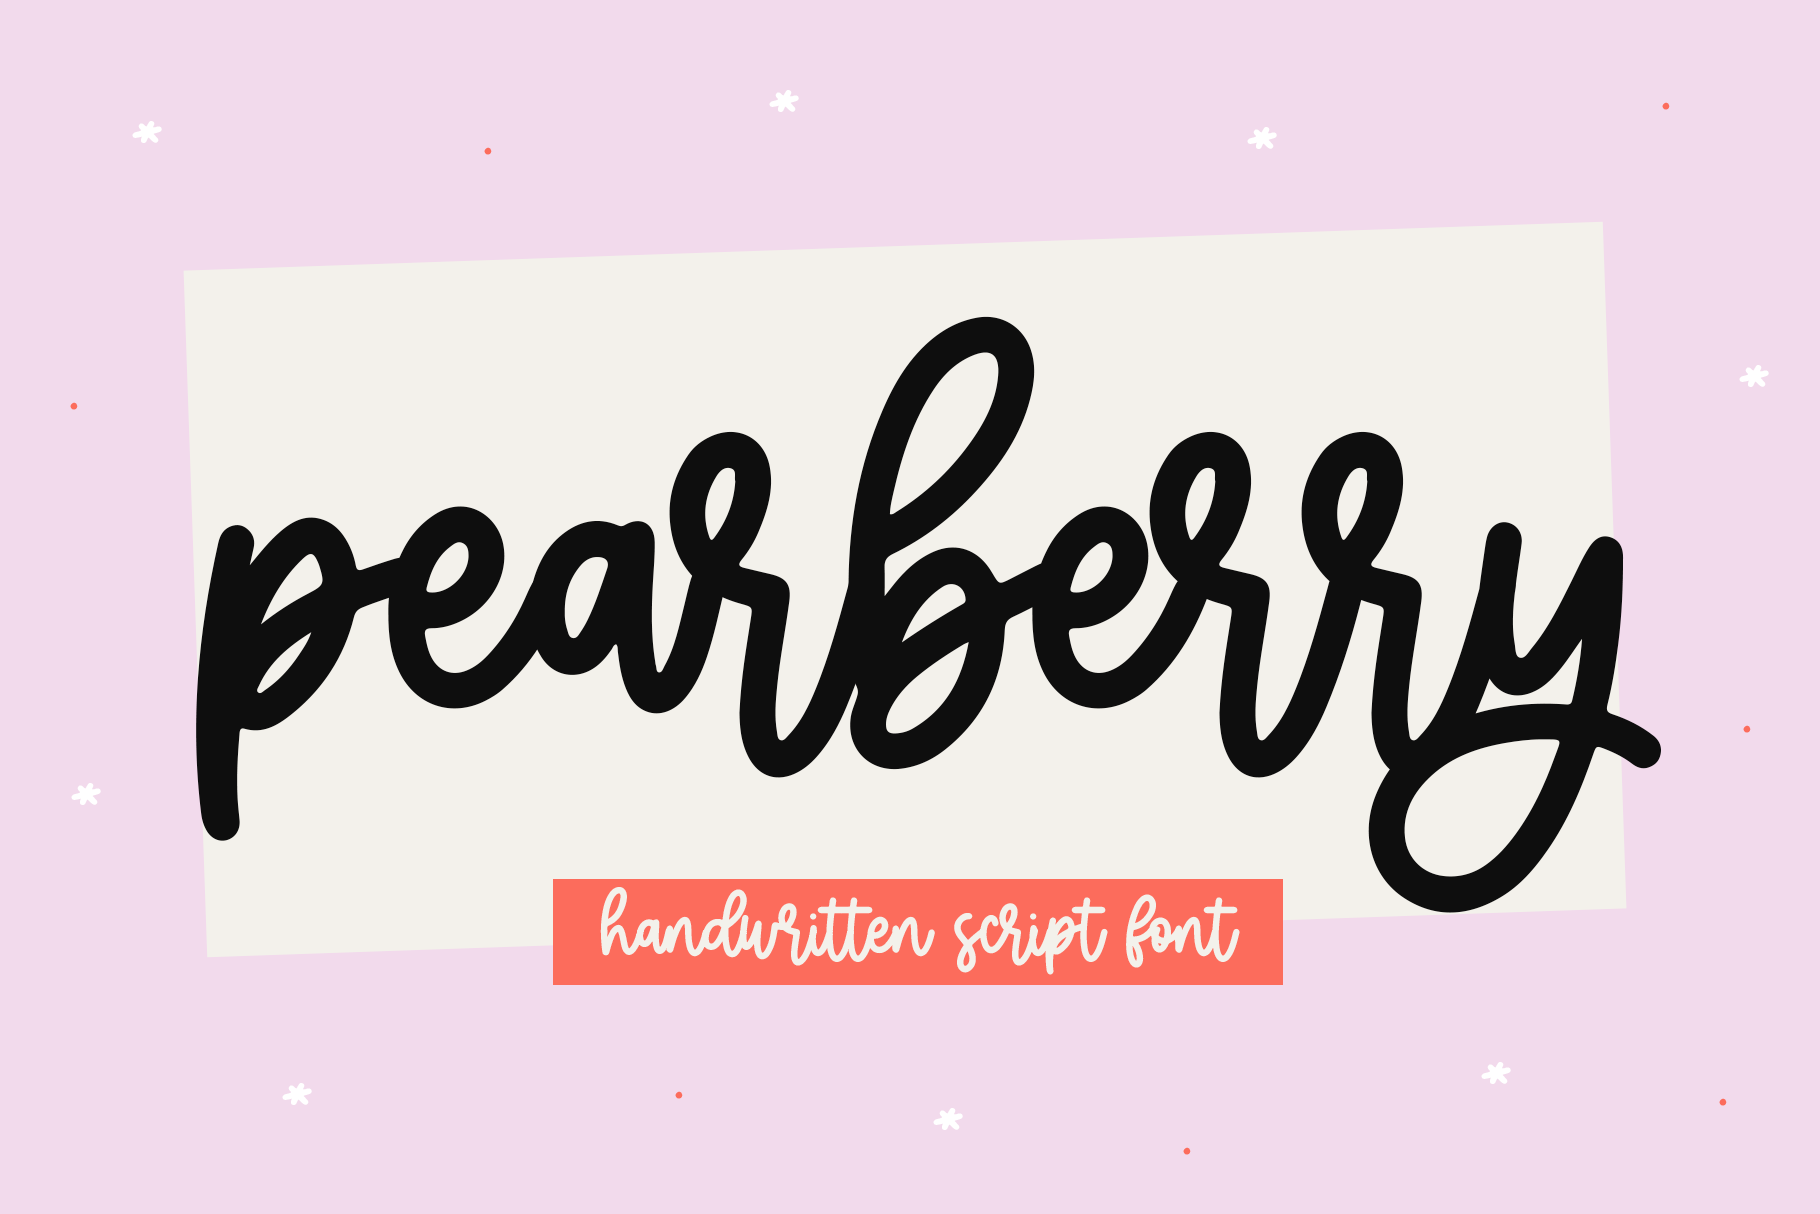 Pearberry Cute Handwritten Script Font By Ka Designs Thehungryjpeg Com